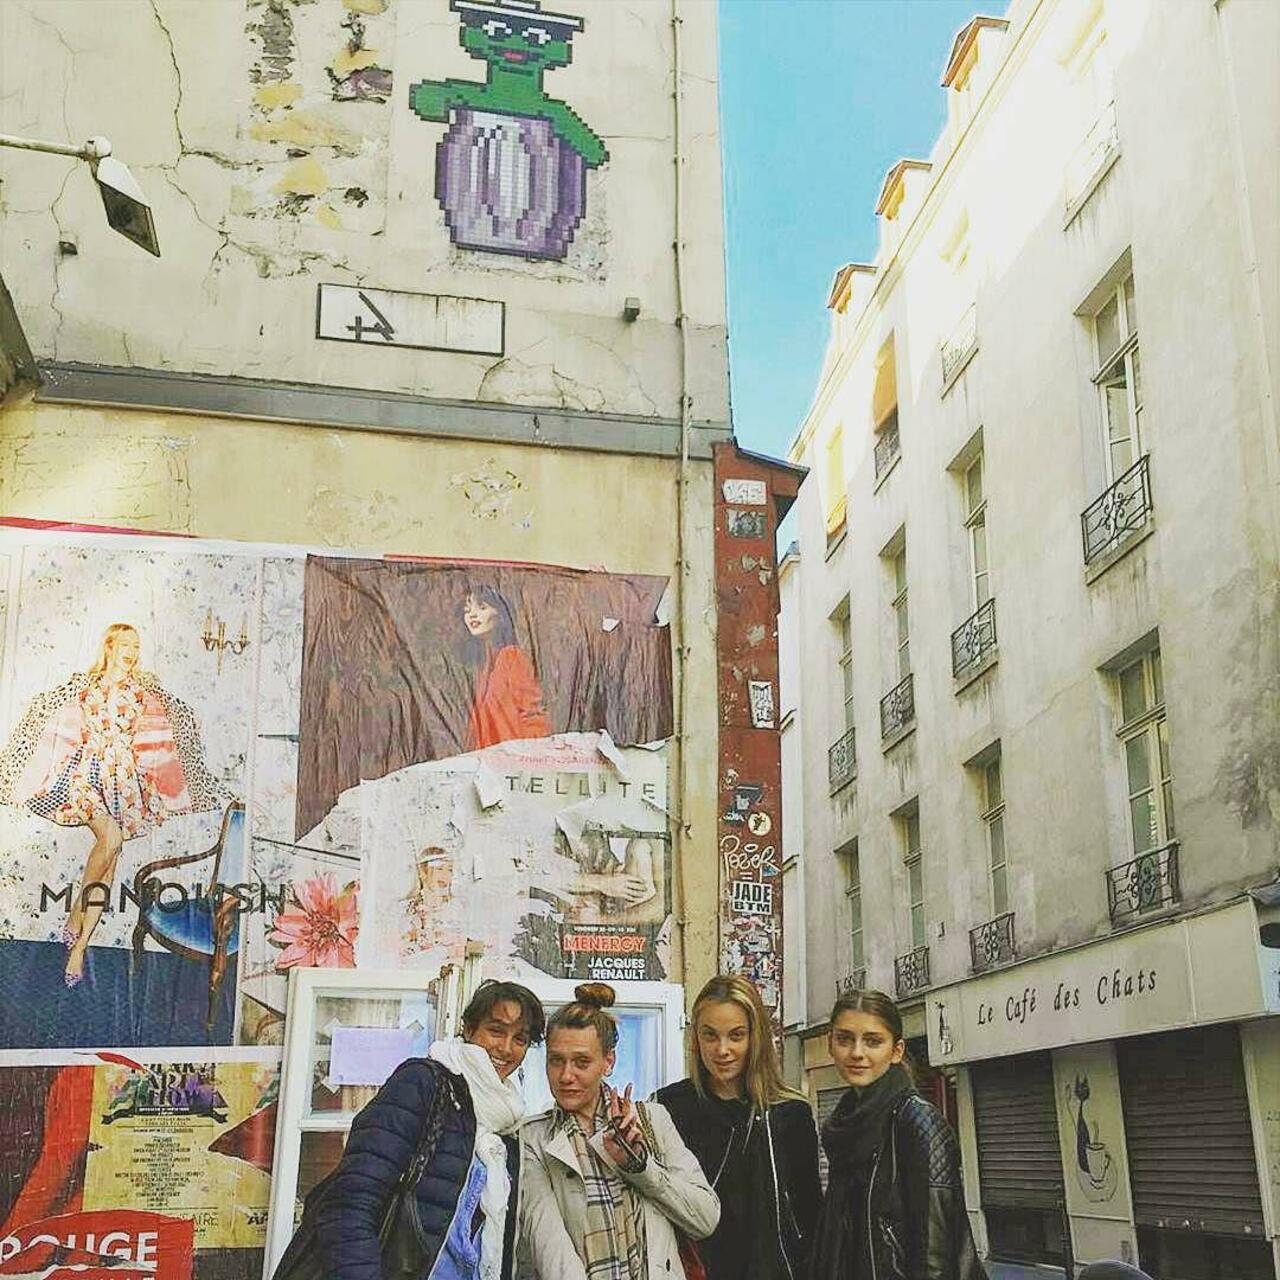 #Paris #graffiti photo by @beabookingstories http://ift.tt/1M35dvY #StreetArt https://t.co/S0A7yNU3vo